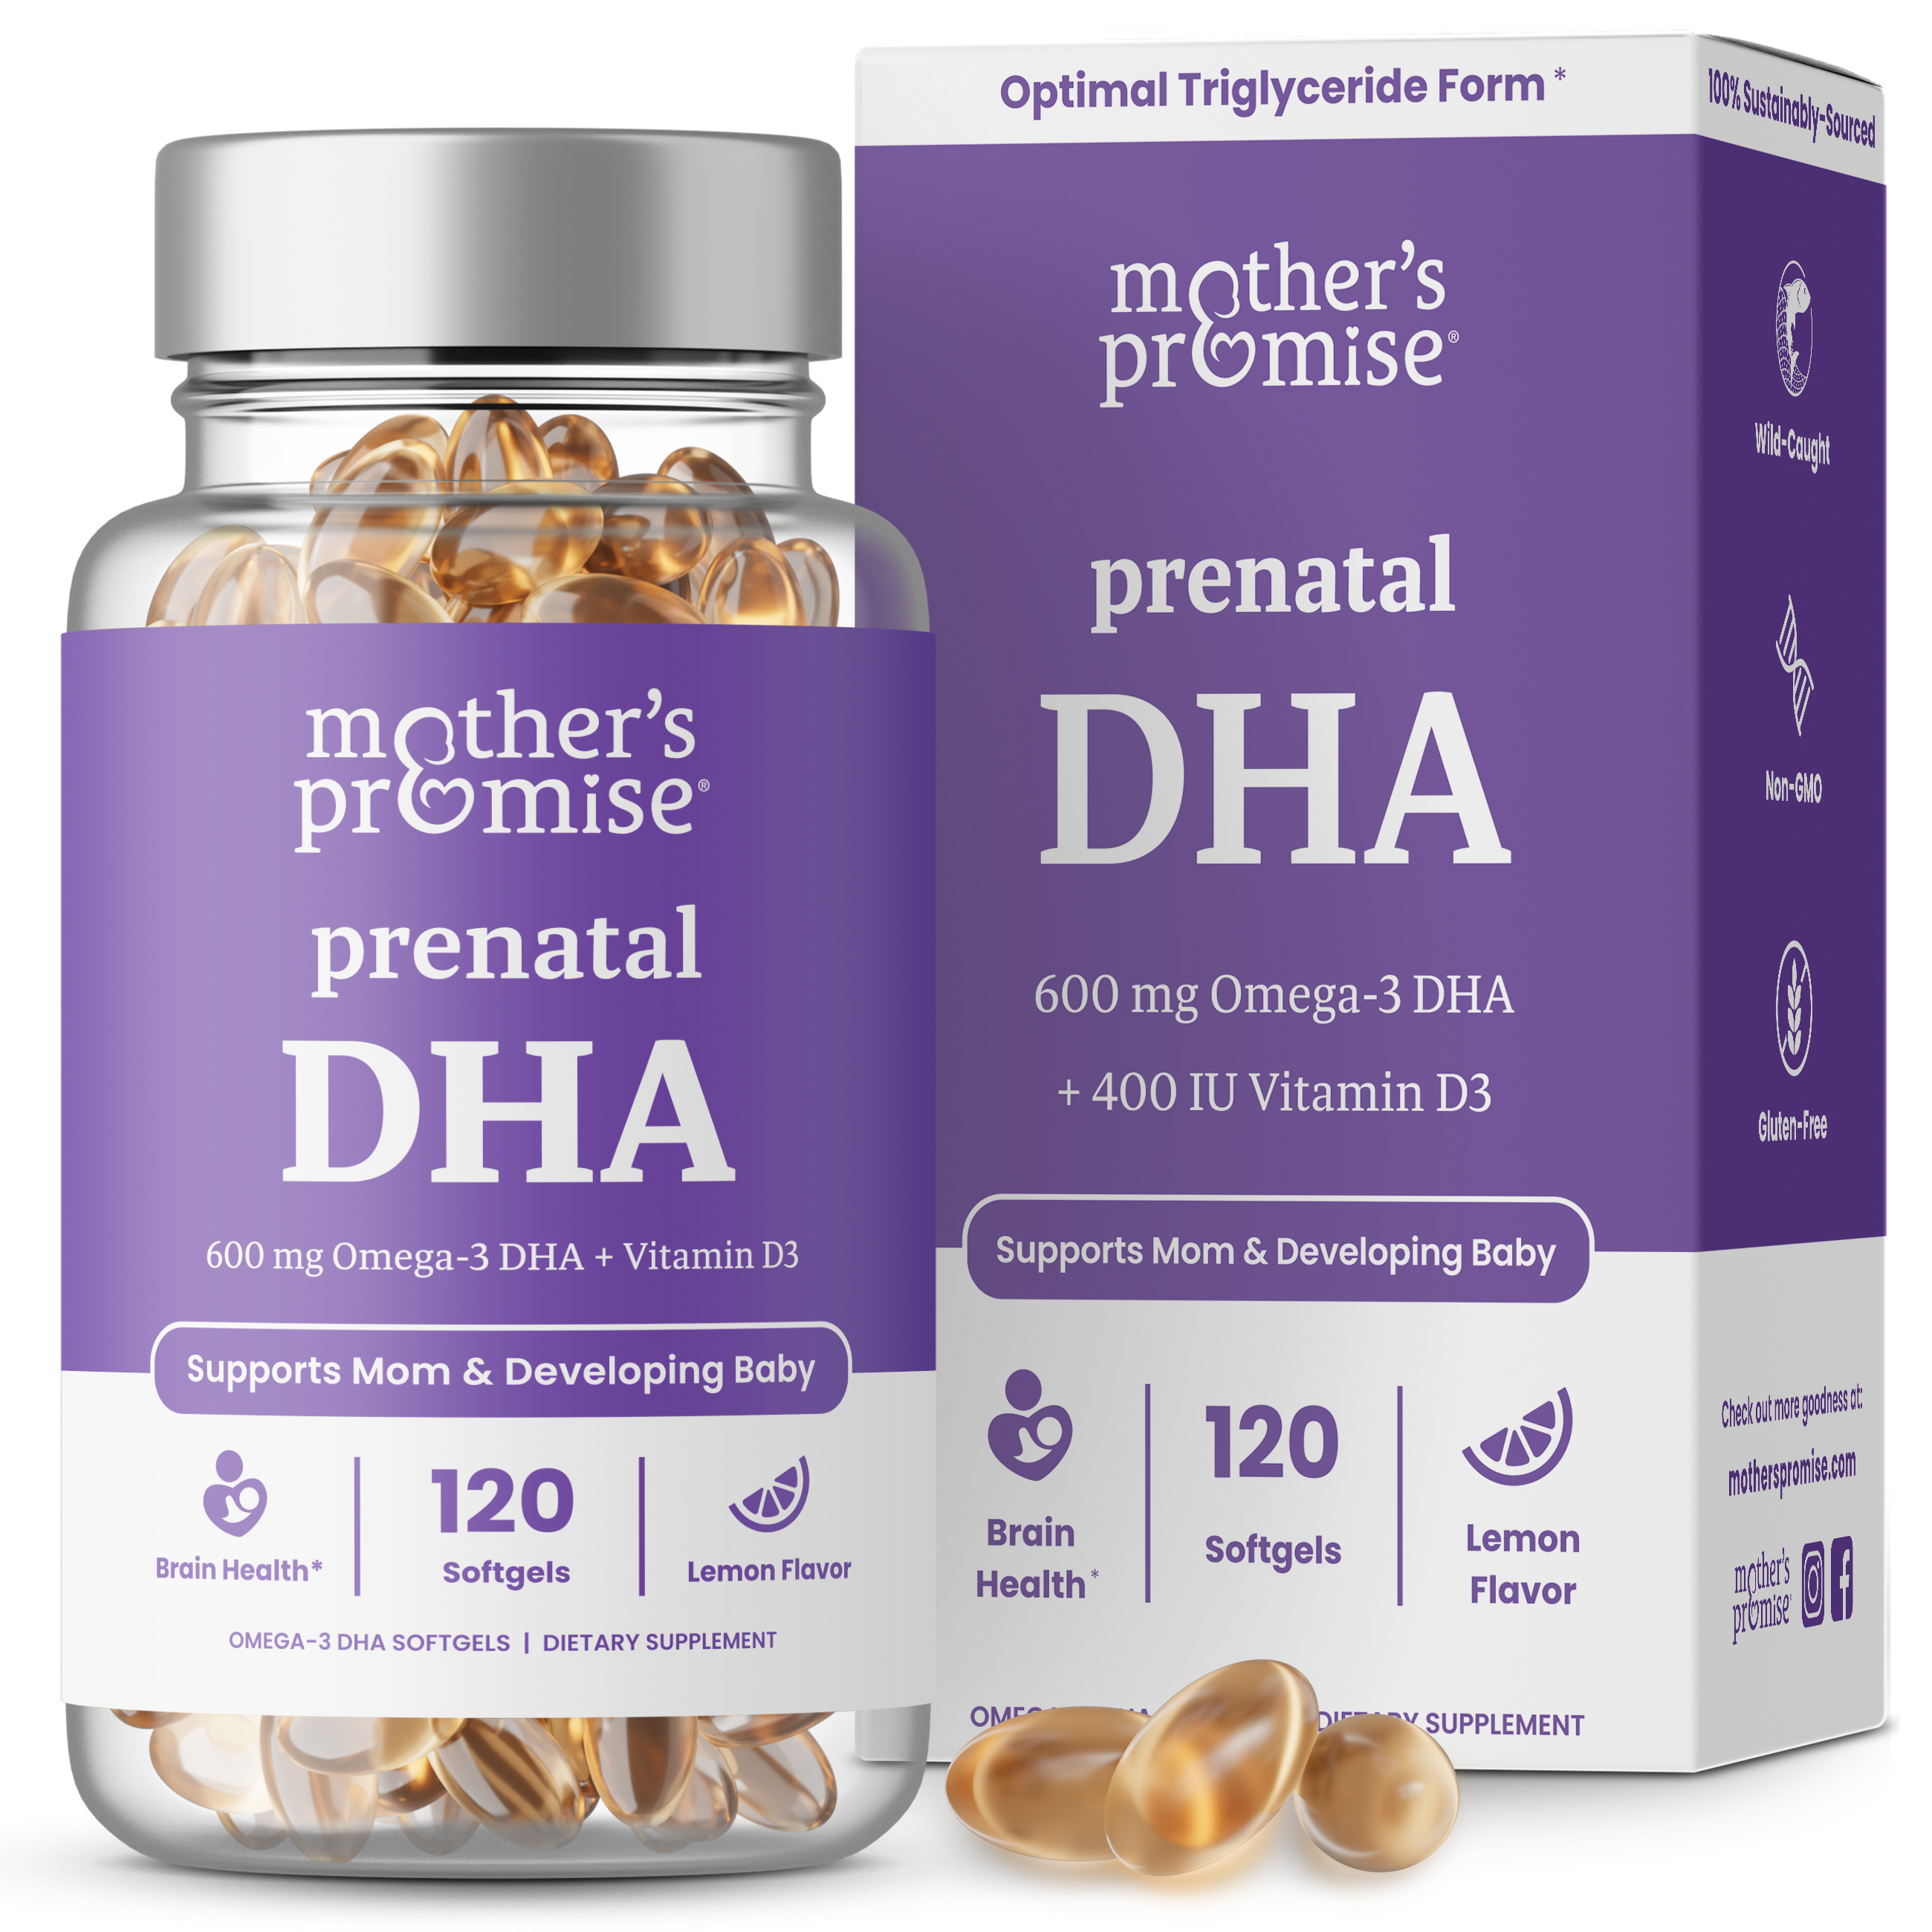 Mother's Promise Prenatal DHA for Women 600mg + 400 IU Vitamin D3 | Triglyceride Omega 3 Fish Oil DHA Prenatal Vitamins for Pregnancy & Nursing | 120 Softgels, Supports Brain Health | 300mg per Capsule